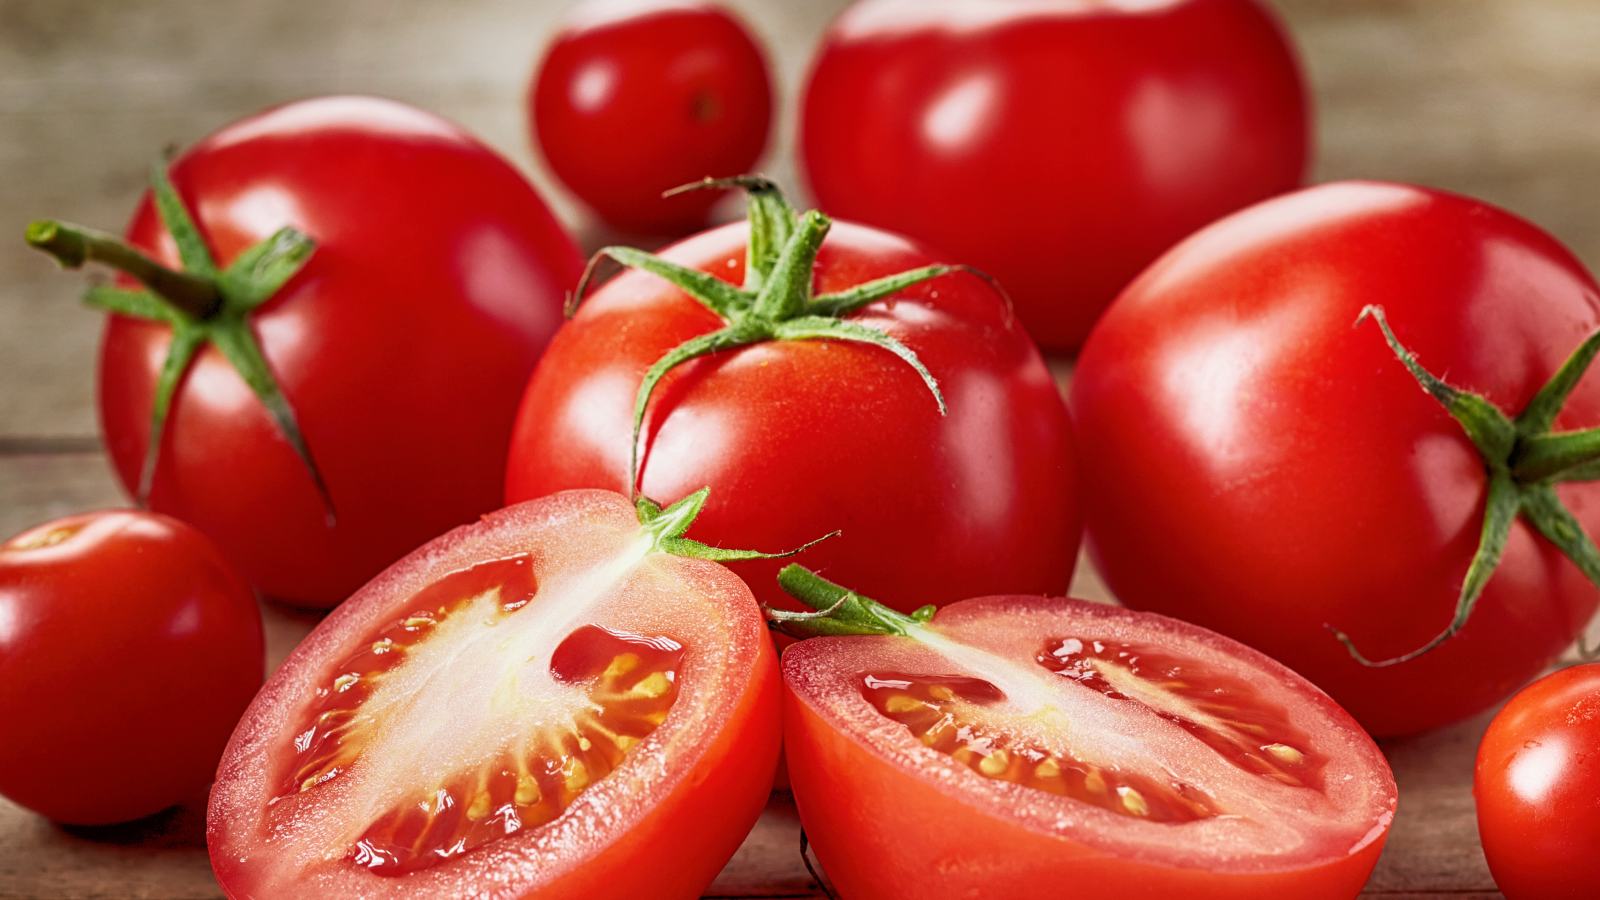 Do tomatoes help manage diabetes?